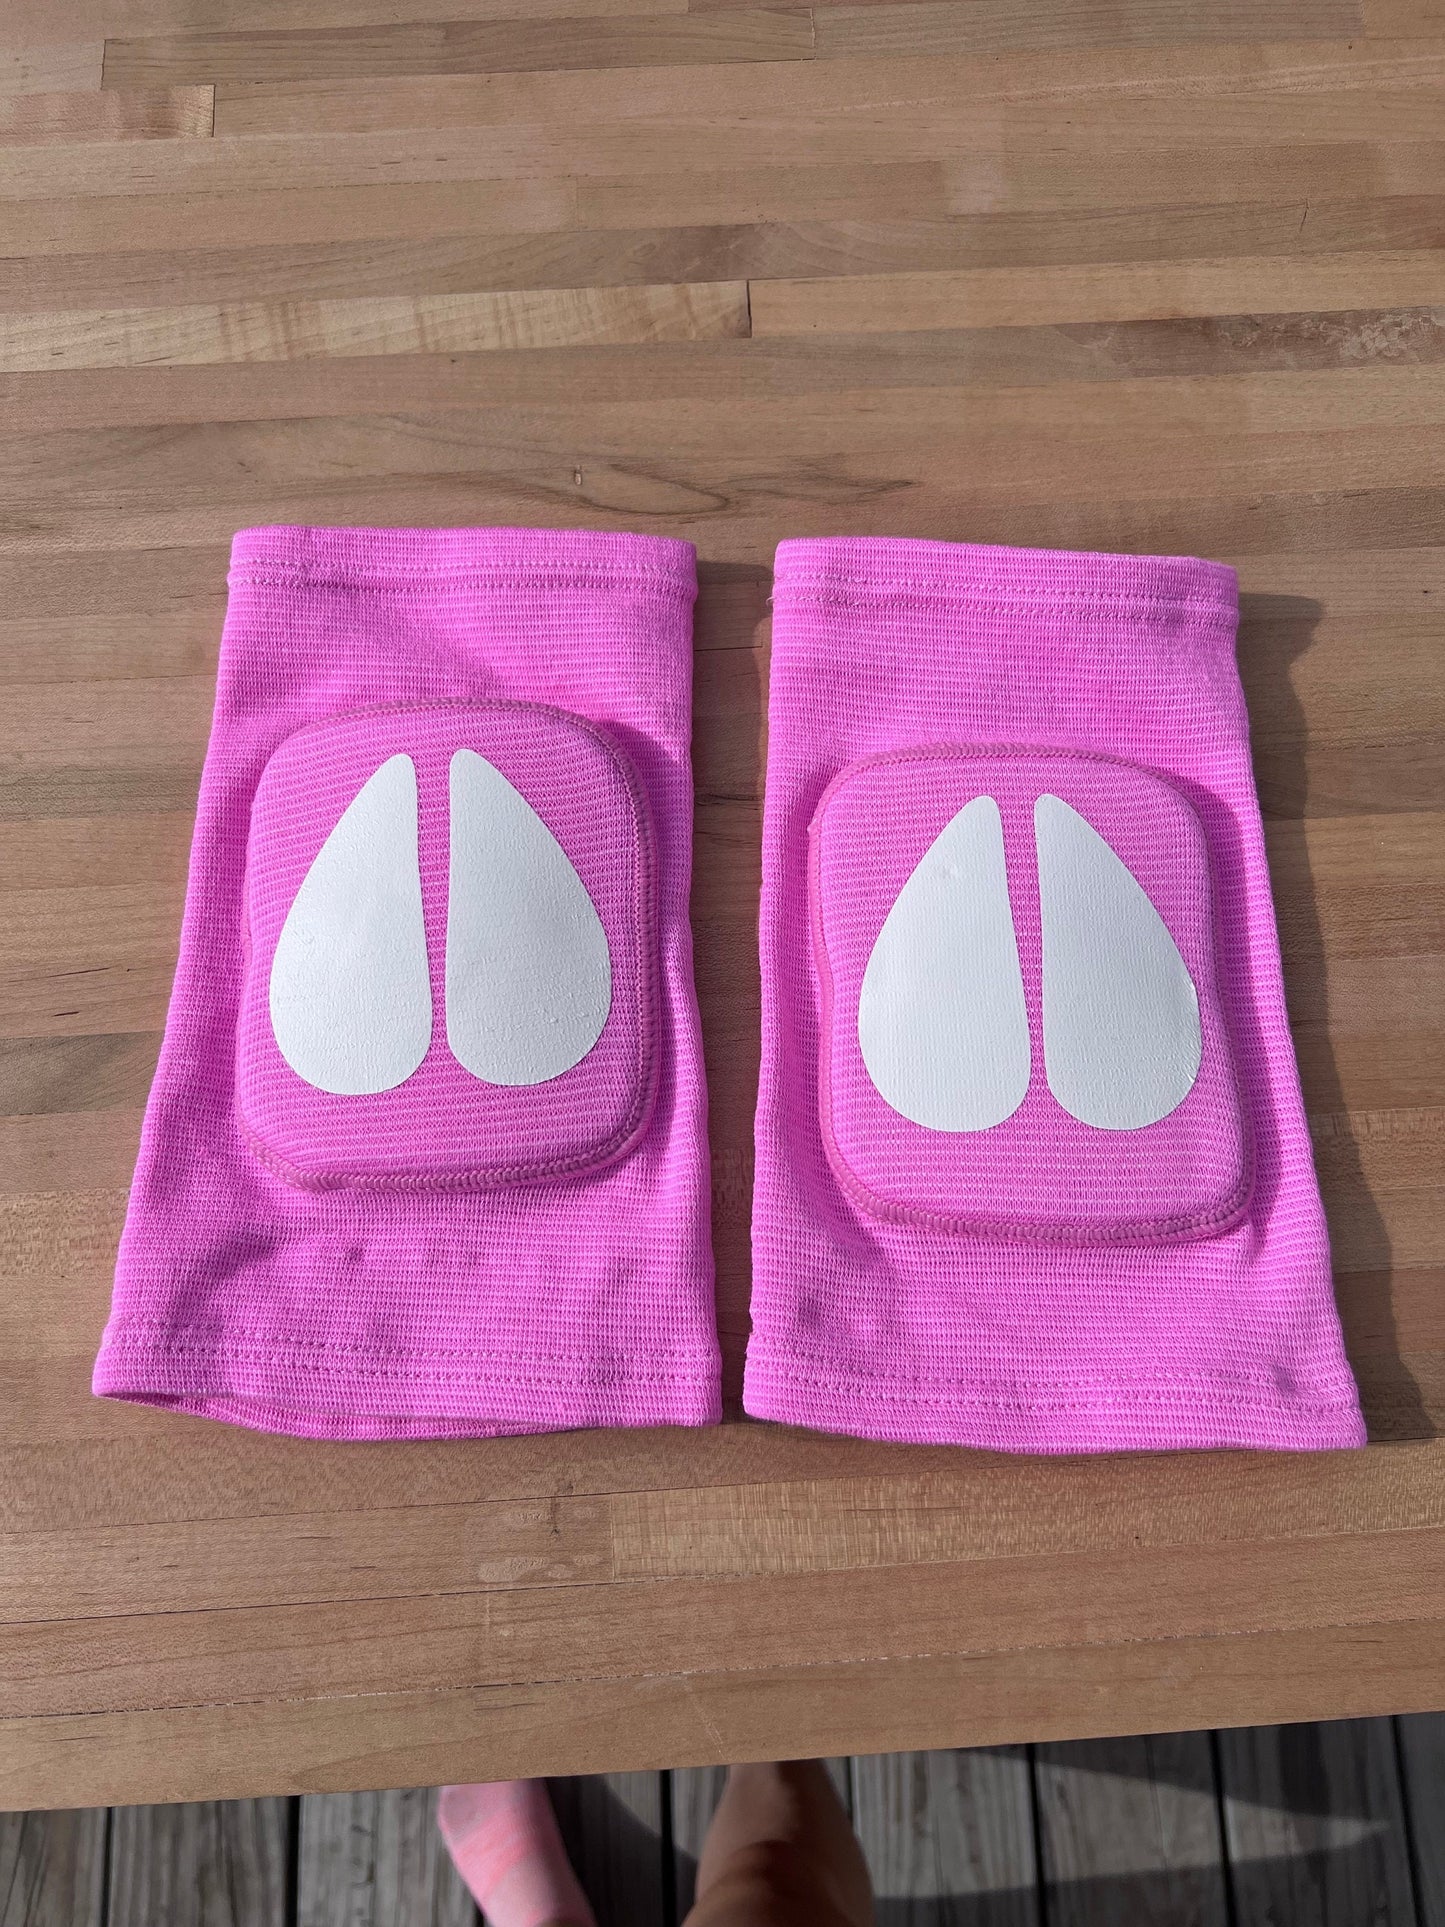 Pink Cow Knee pads